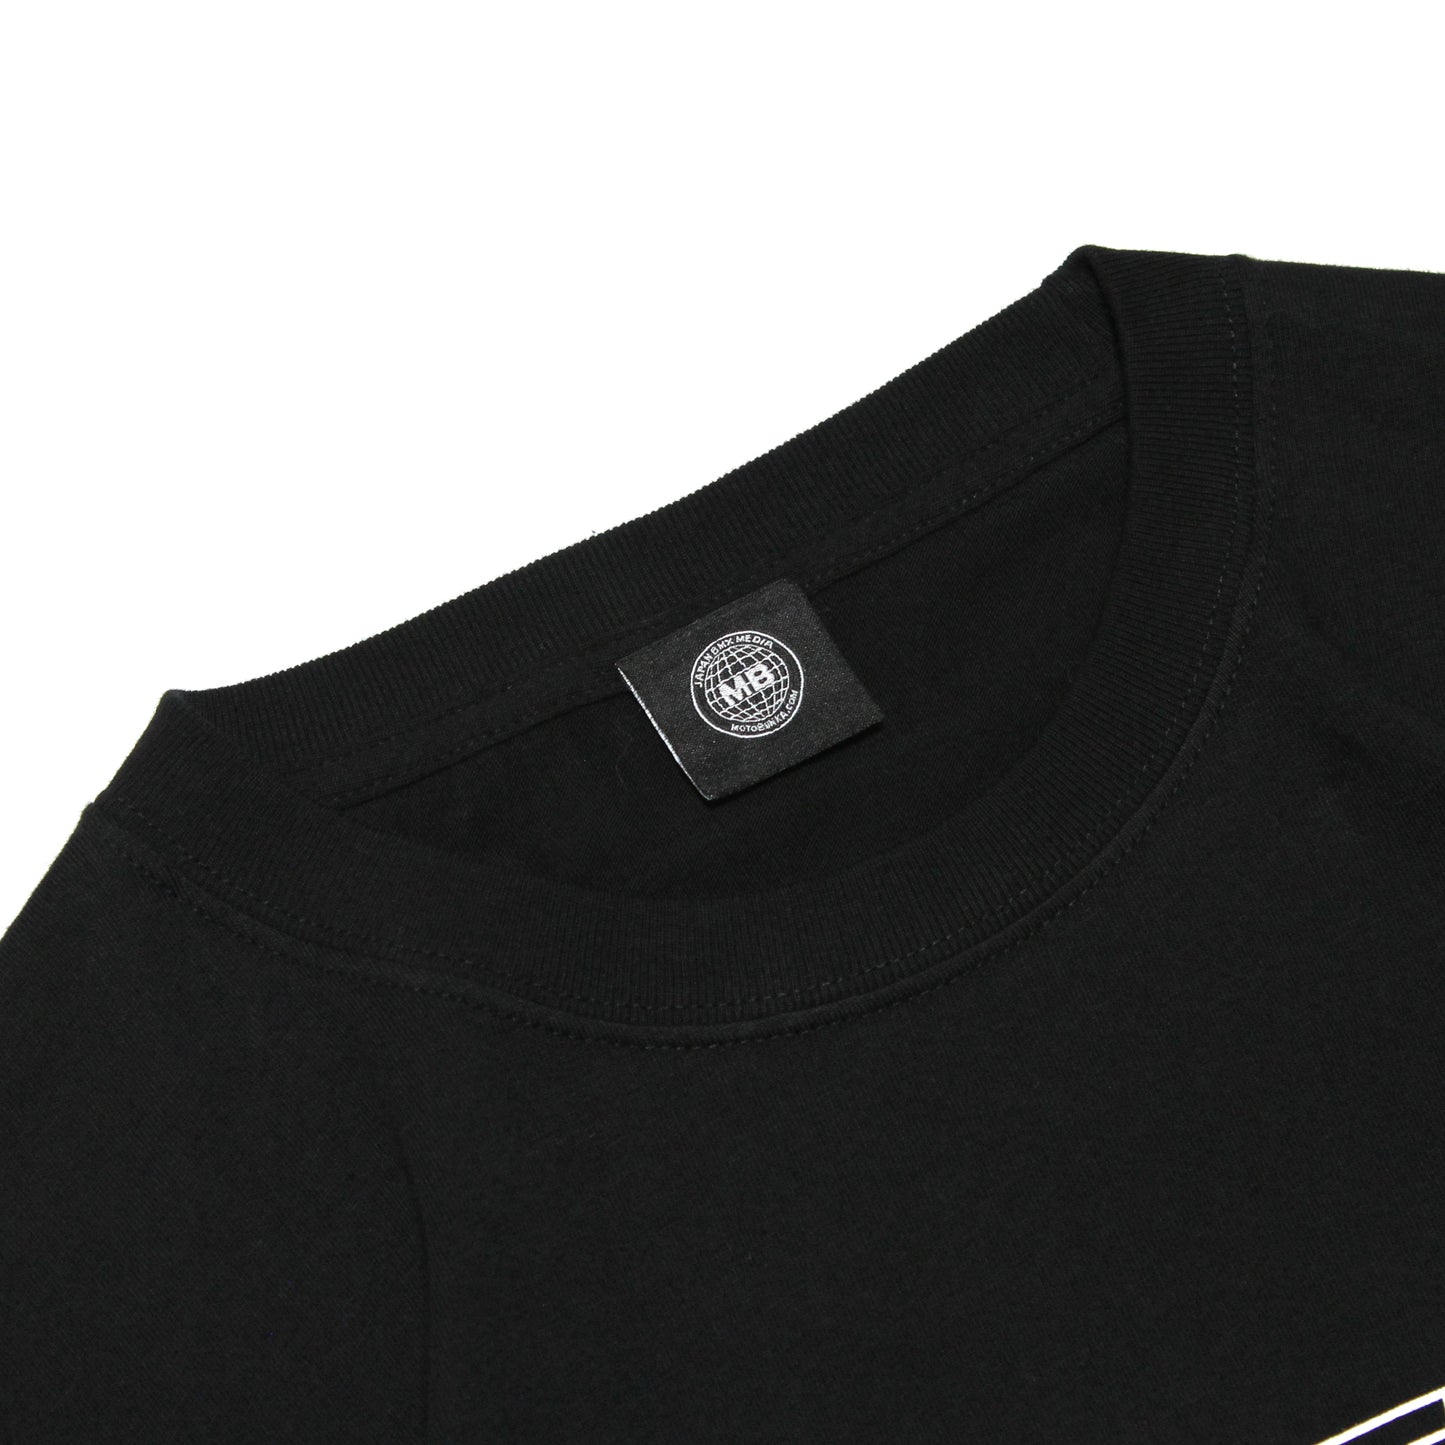 MOTO-BUNKA - MOTO-CUP Logo T-Shirt/Black-White